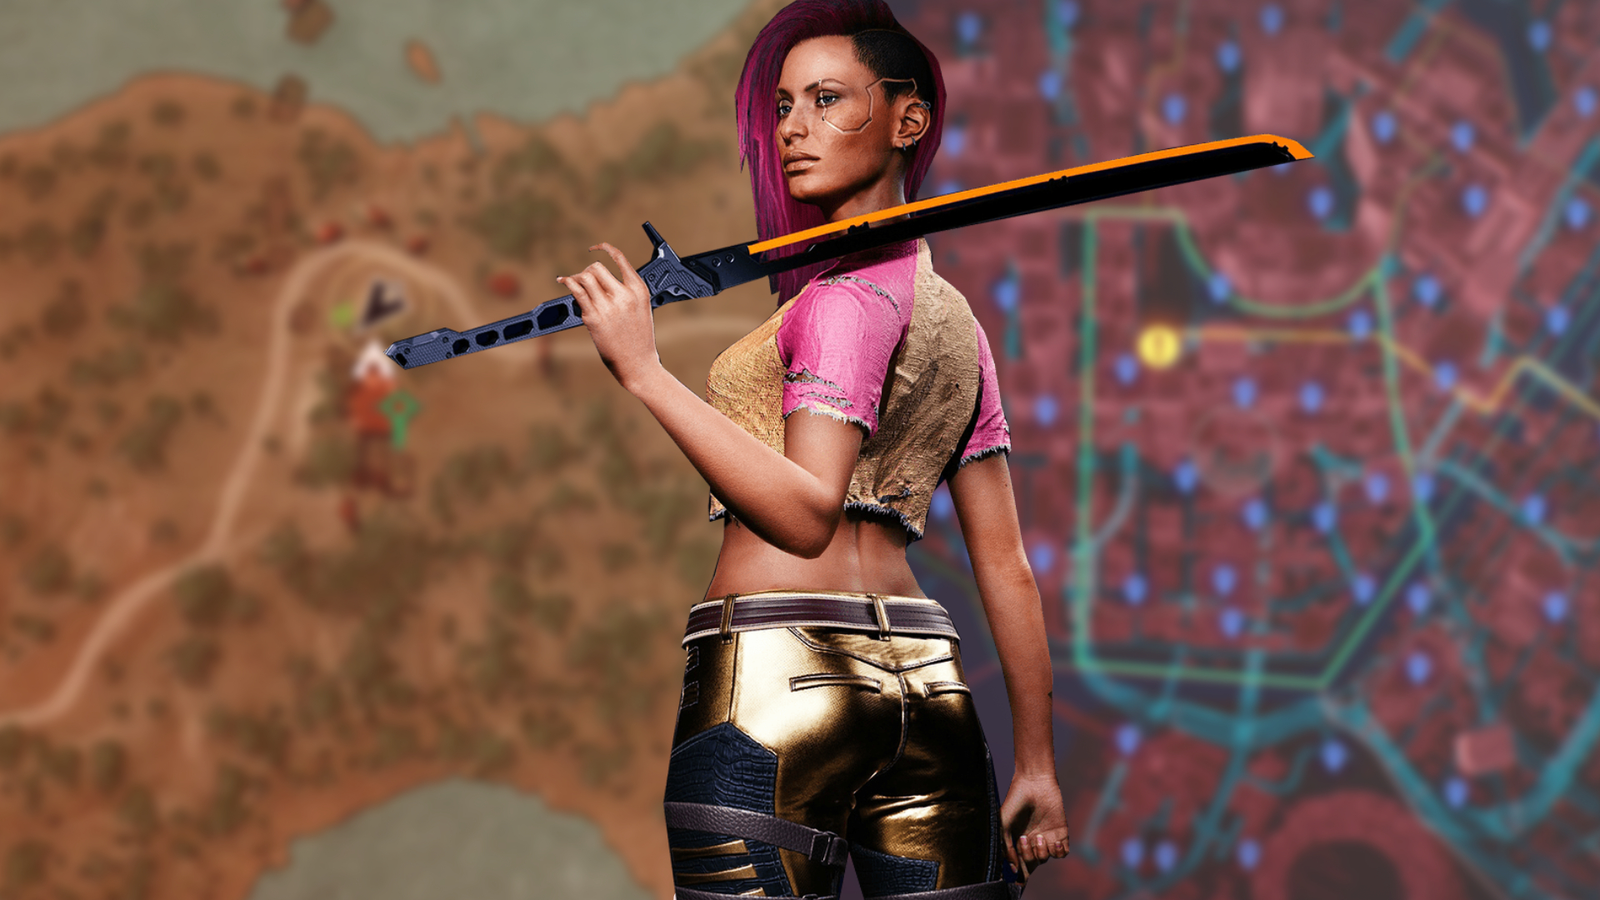 Ciri Witcher x Cyberpunk 2077 HD Games Wallpapers, HD Wallpapers